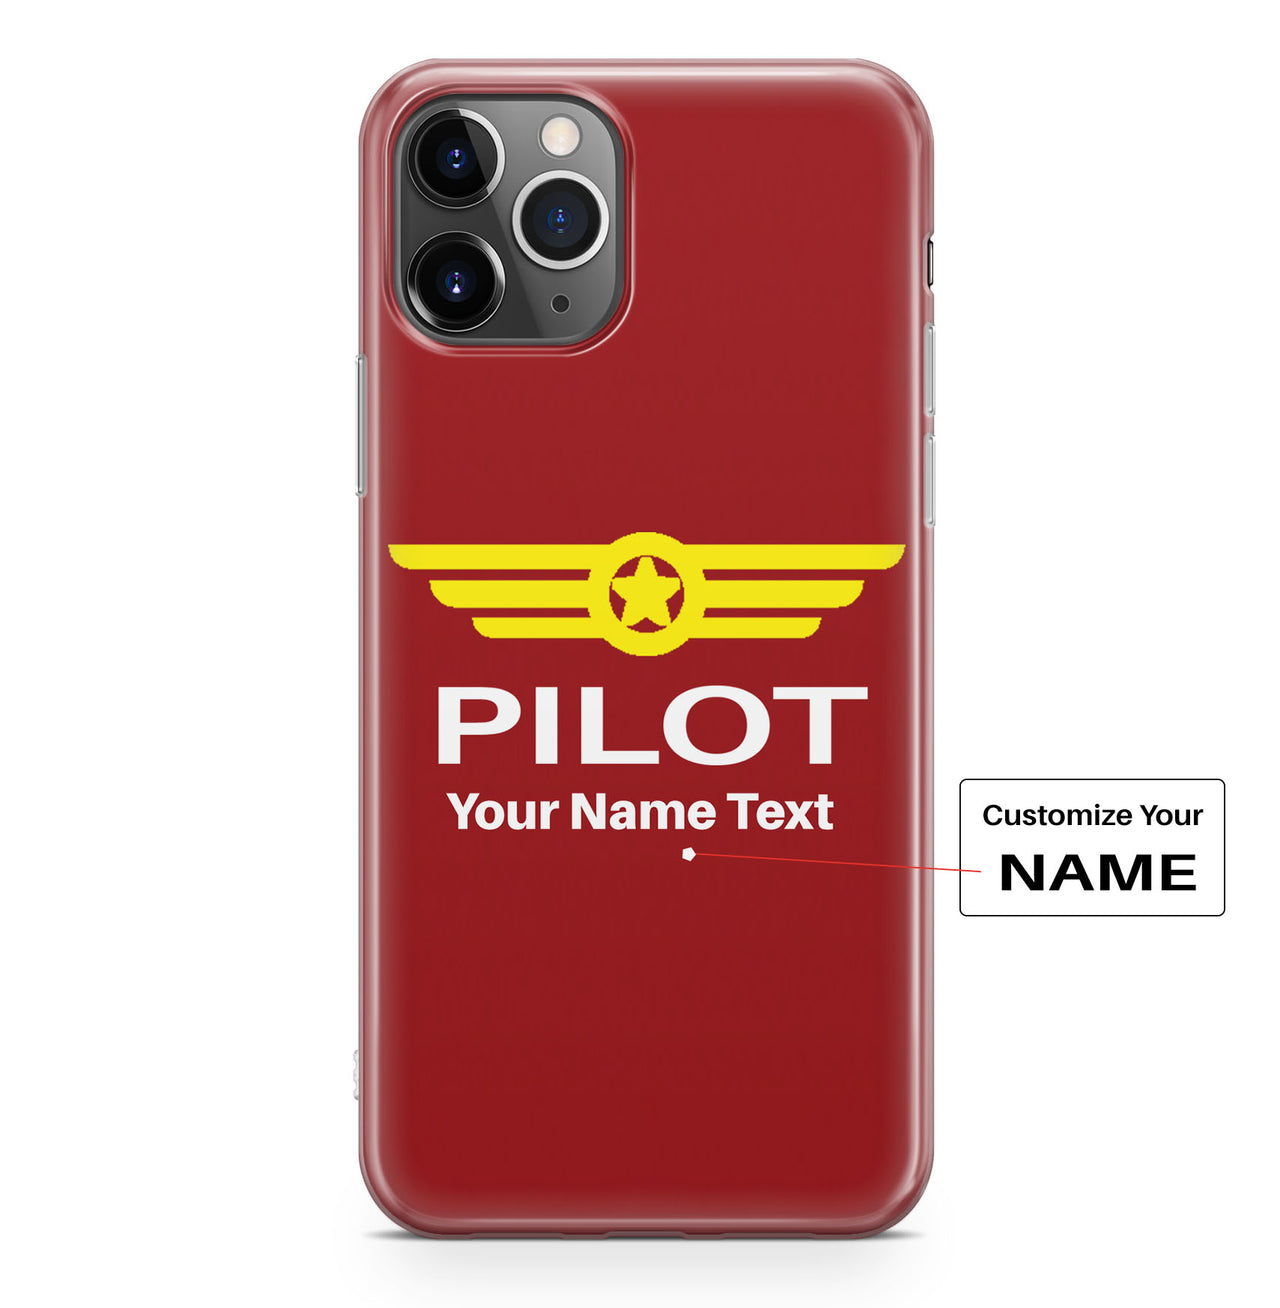 Pilot & Badge (+Customizable Name) Designed iPhone Cases